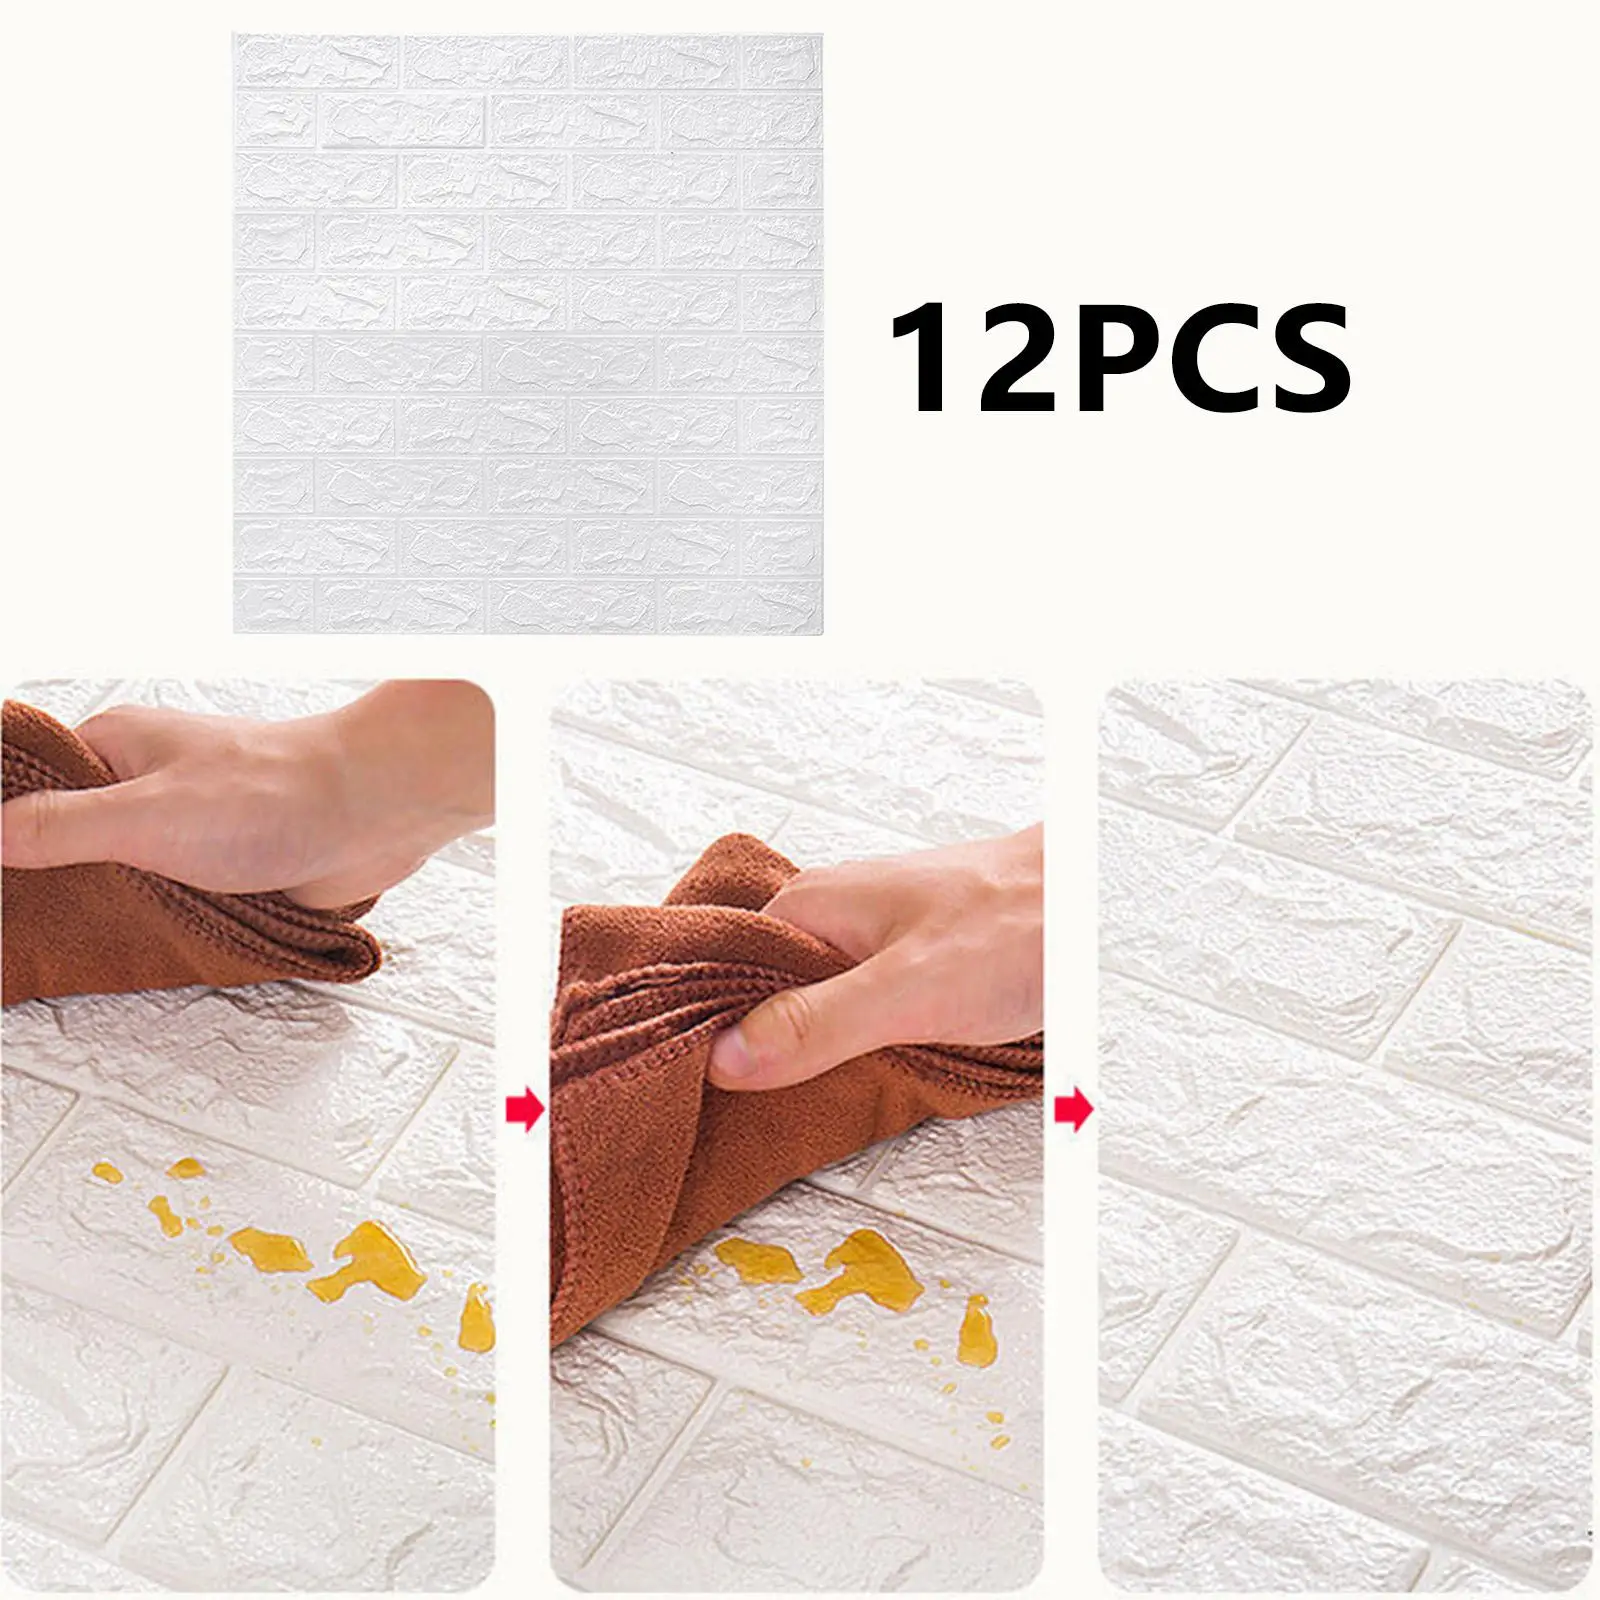 12Pcs 3D Brick Wall Panels Wall Panels Peel and Stick Foam Wall Panels for Living Room Bedroom Kitchen TV Wall Decoration